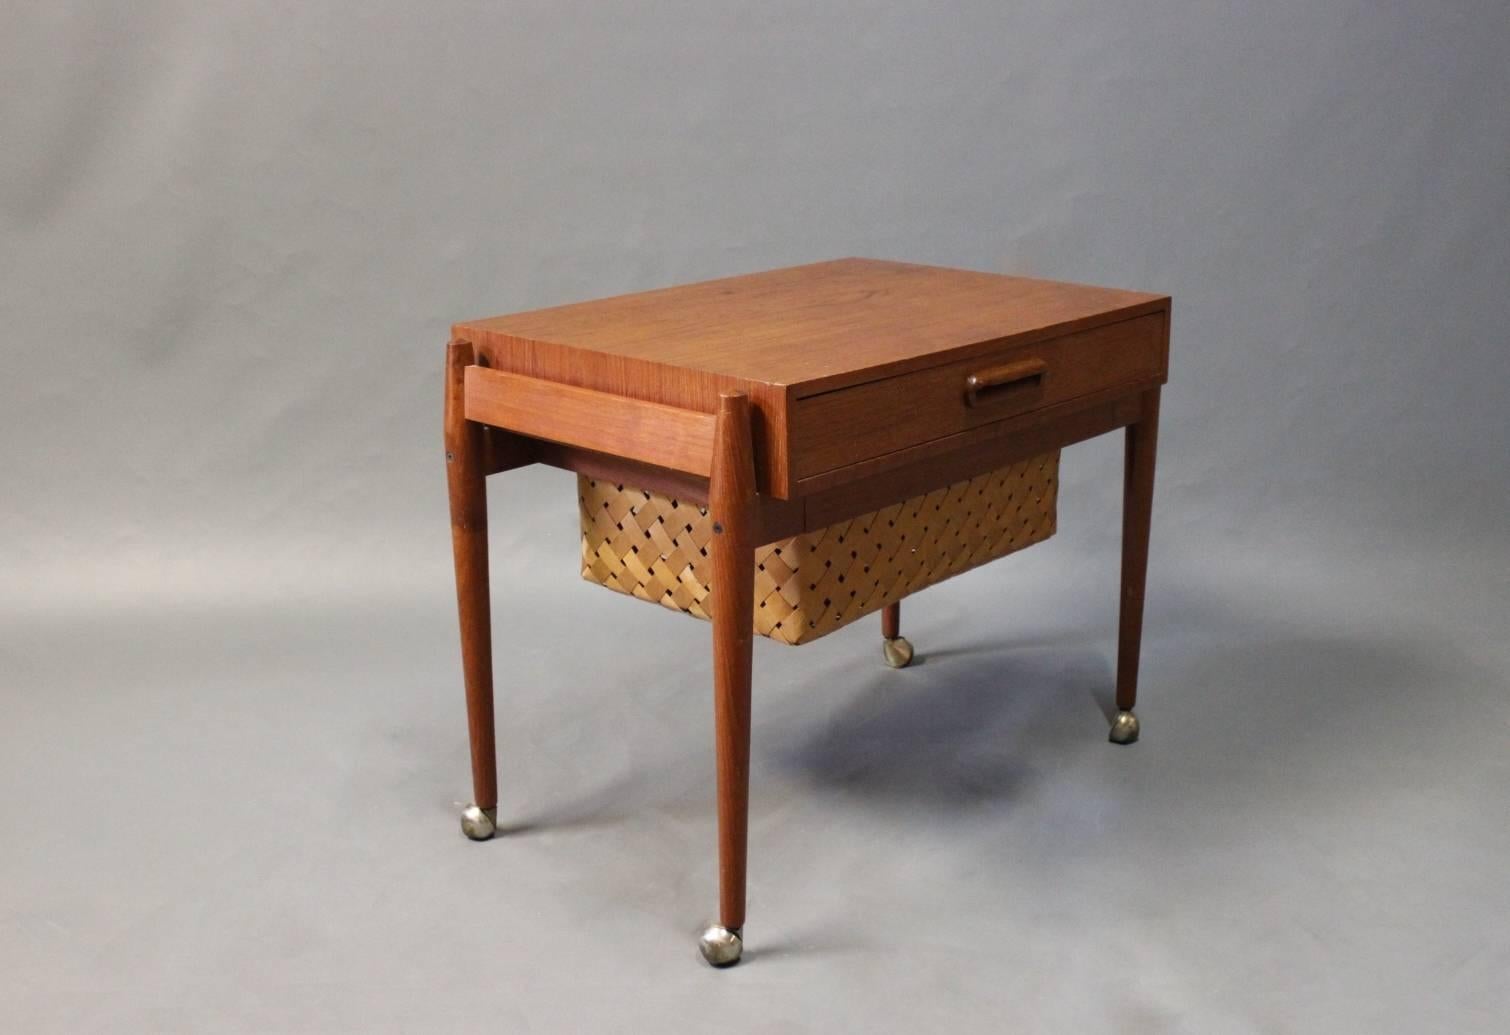 Scandinavian Modern Small Sewing/Work Table in Teak, Danish Design, 1960s